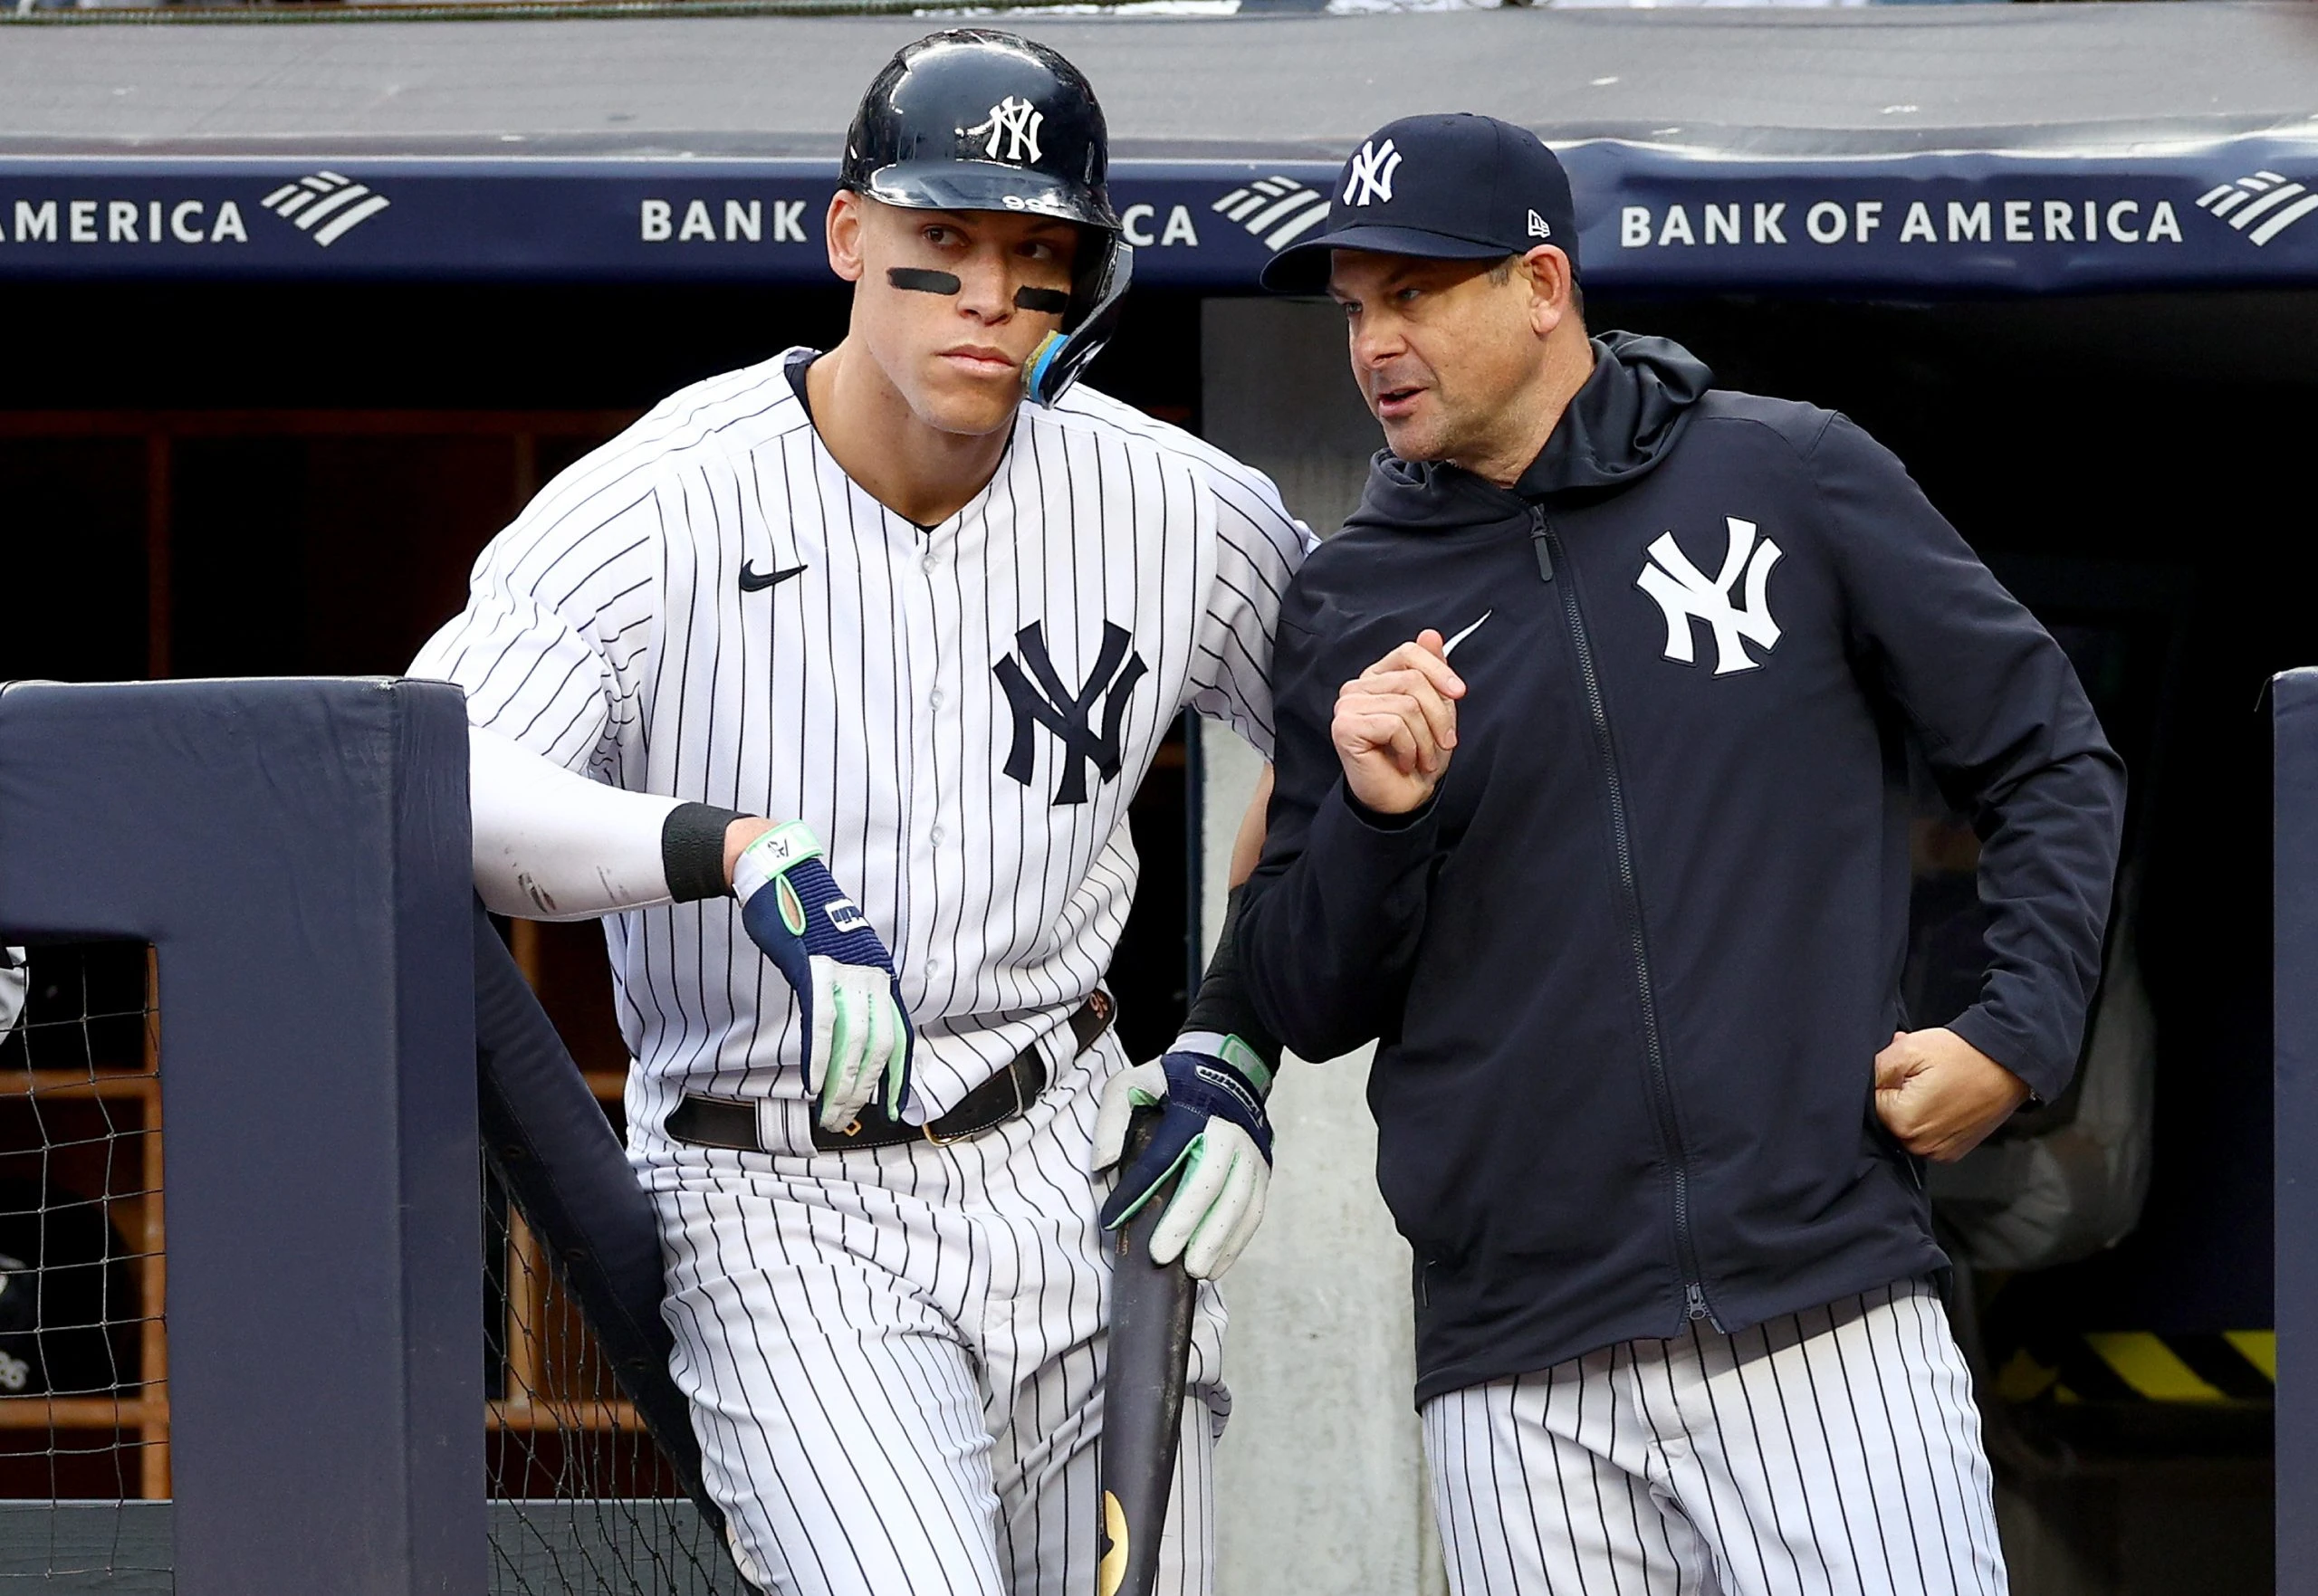 Yankees news: Whe ny yankees uniform n Aaron Judge might pass